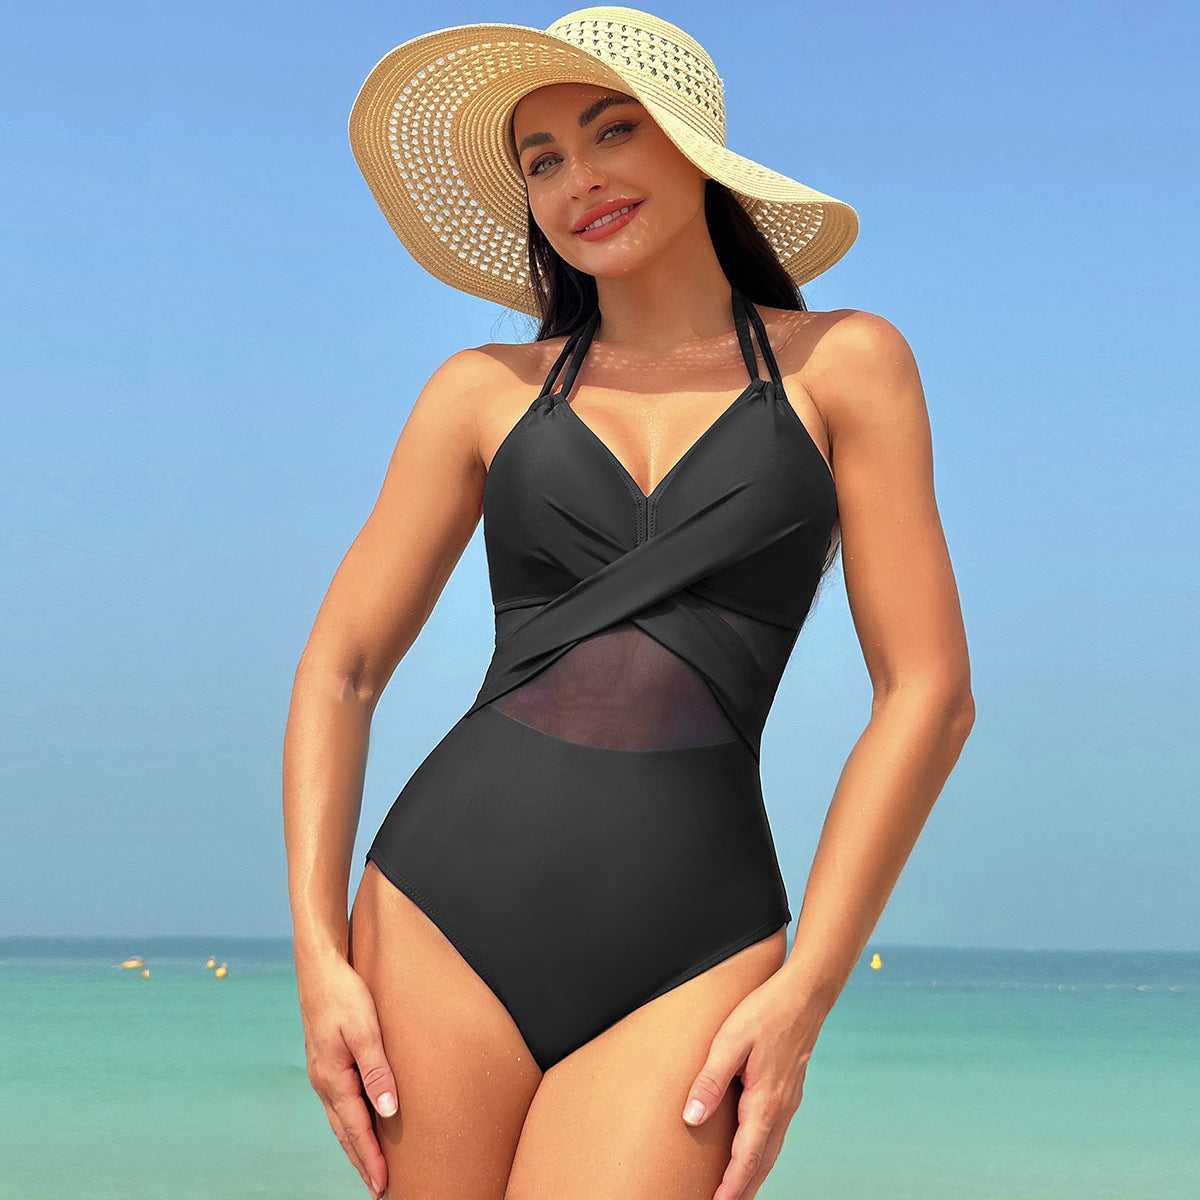 BeachGlam Swimsuit - Elegant Halter-Neck One-Piece Swimsuit